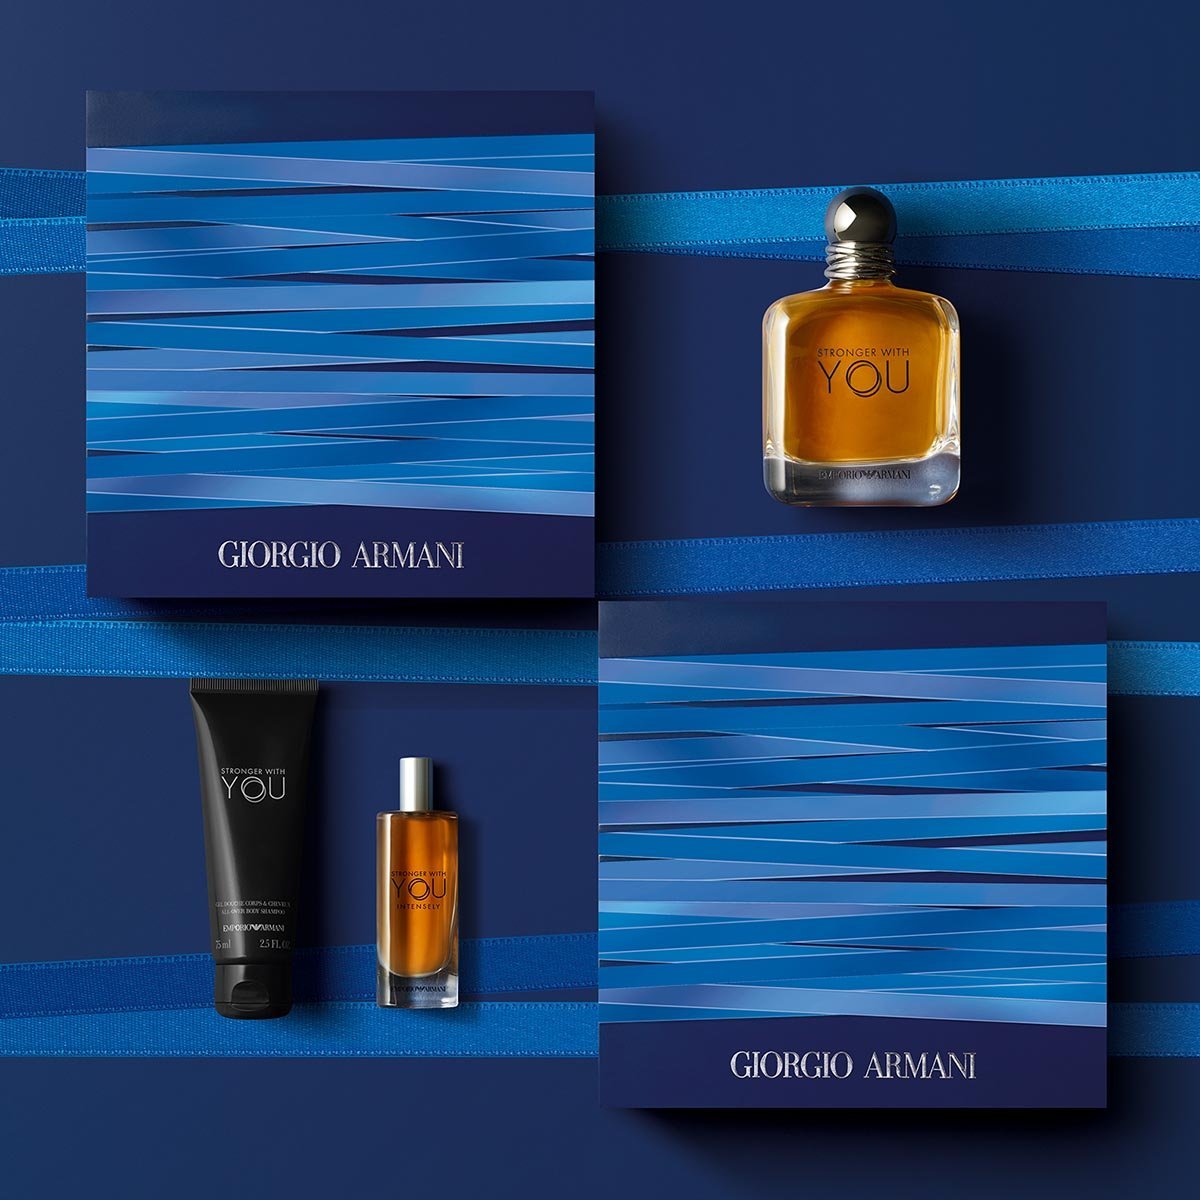 Giorgio Armani Stronger With You Intensely EDP Gift Set - My Perfume Shop Australia